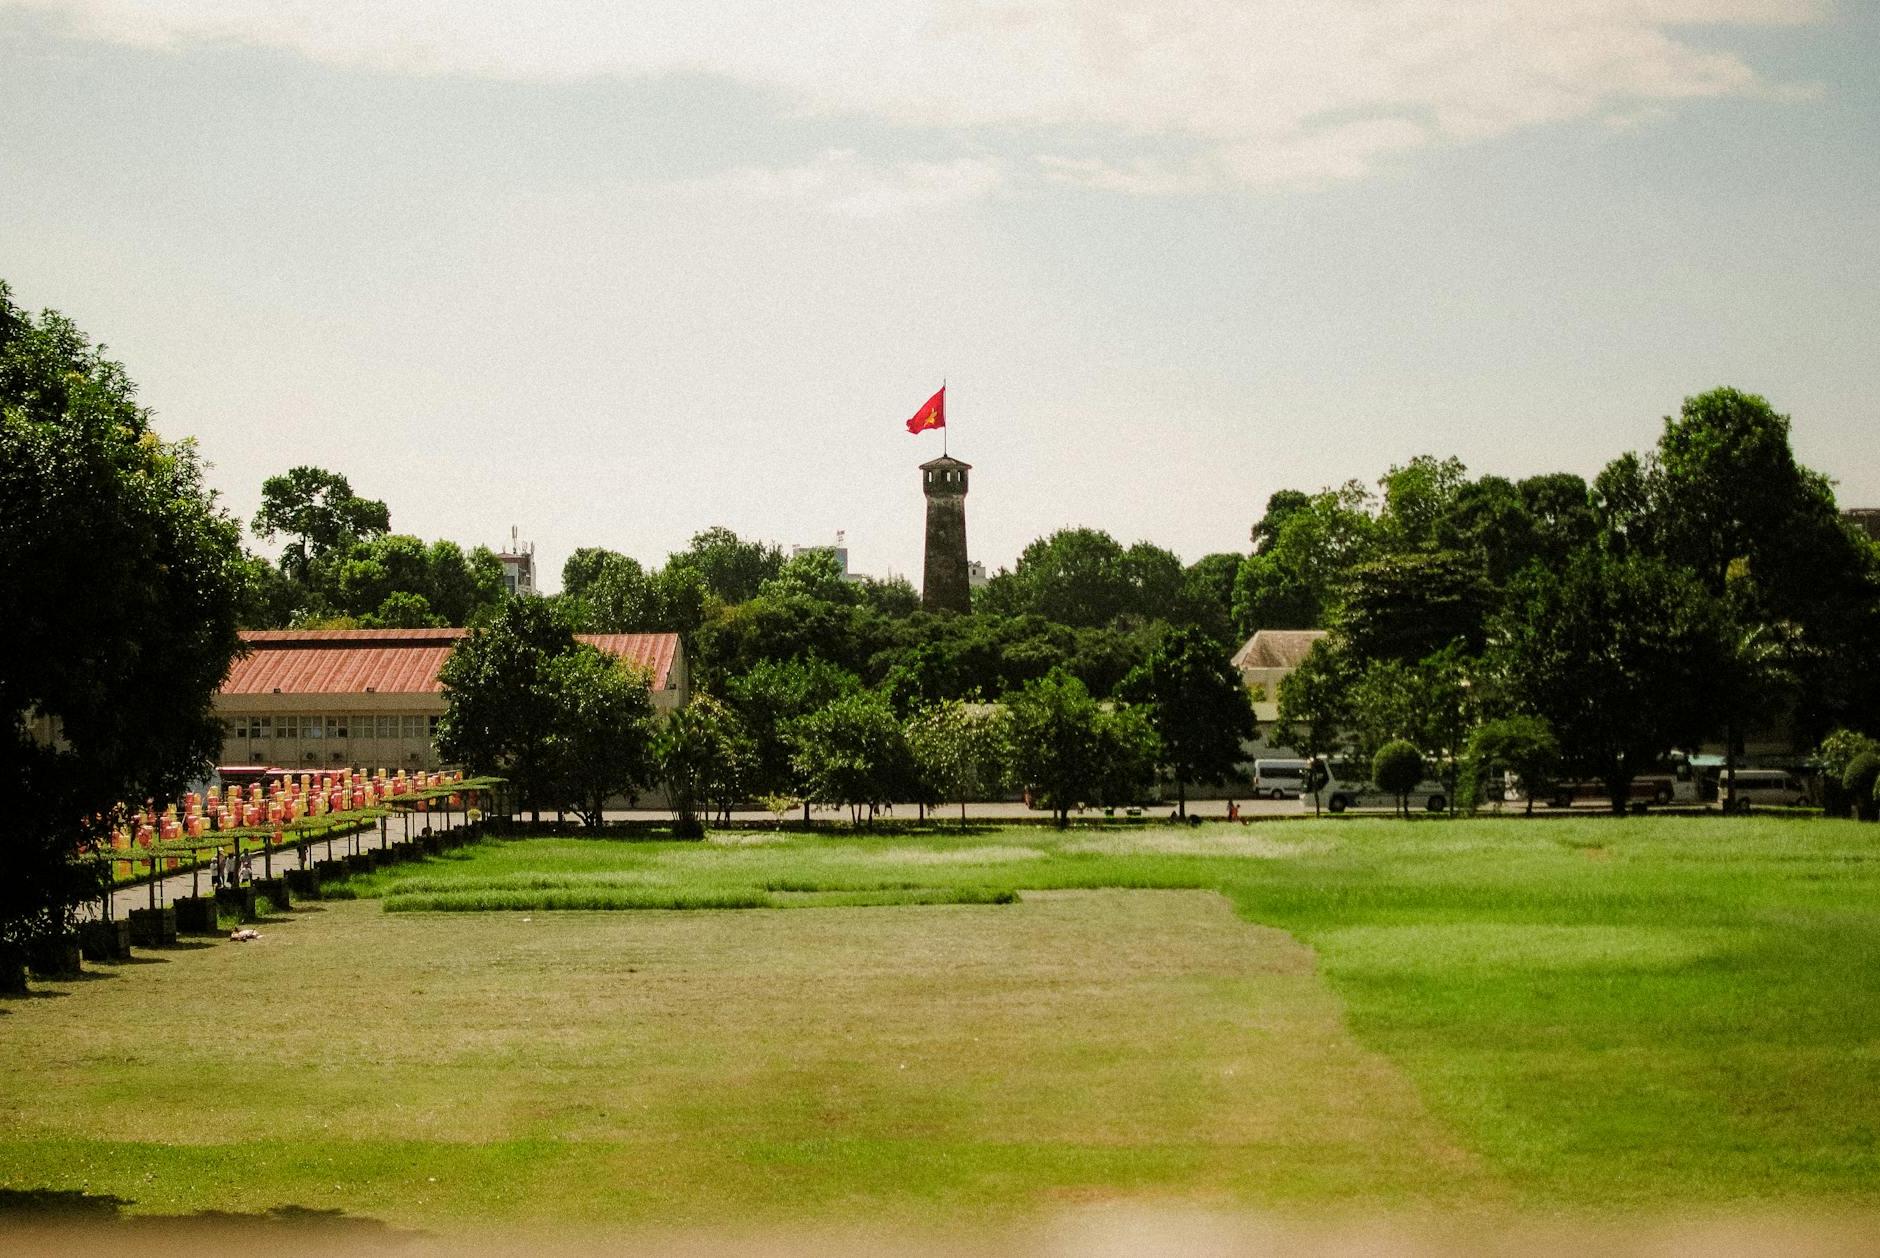 Hanoi Flagtower in in Hanoi, Vietnam